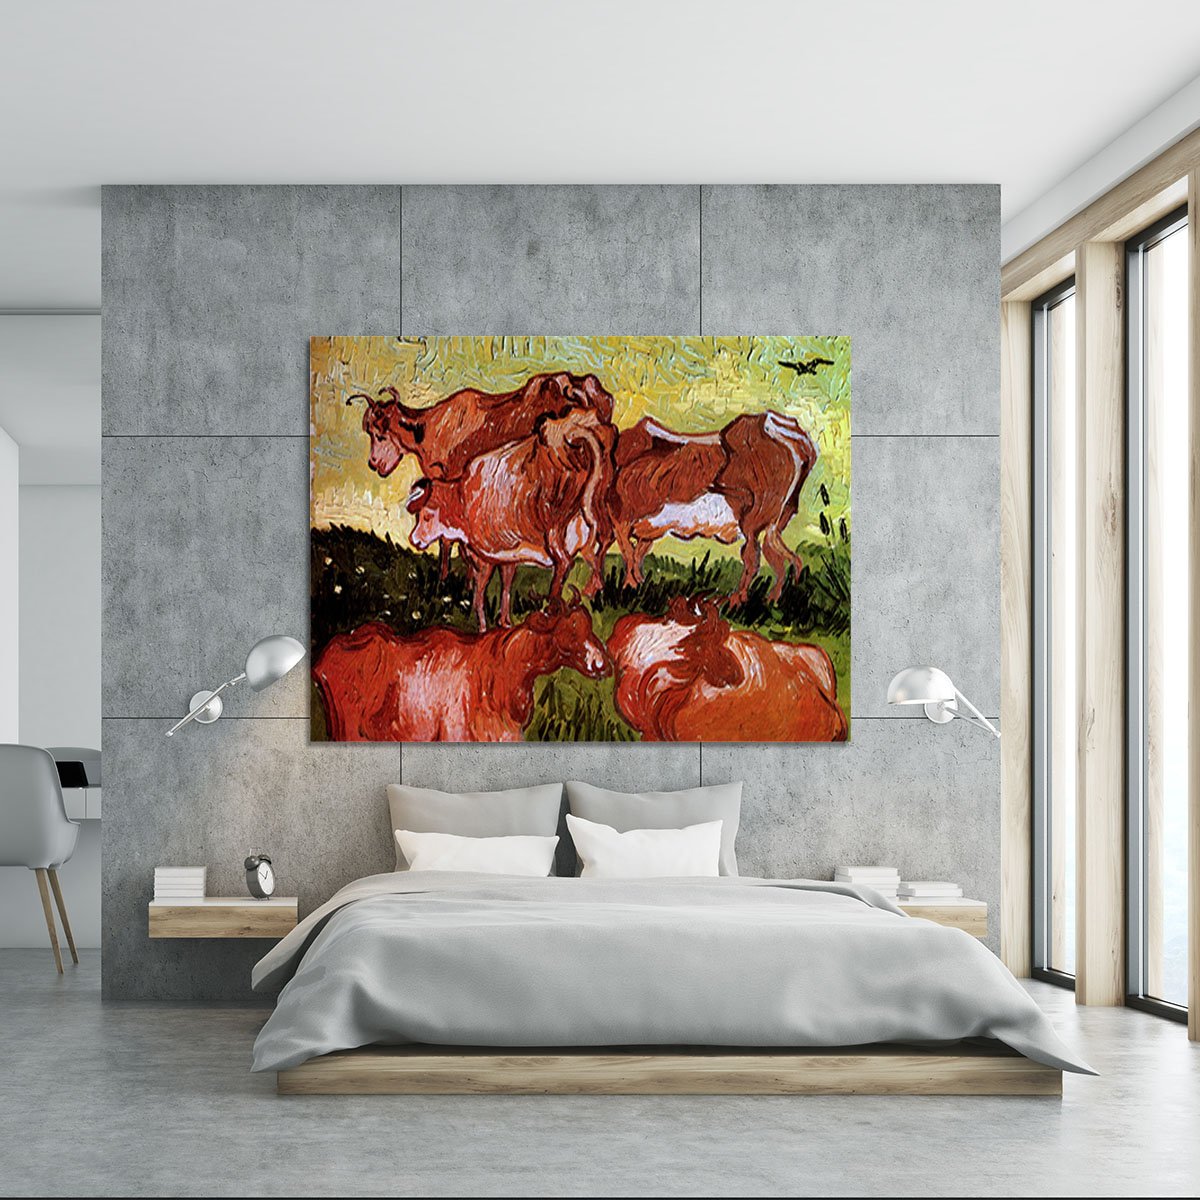 Cows after Jordaens by Van Gogh Canvas Print or Poster